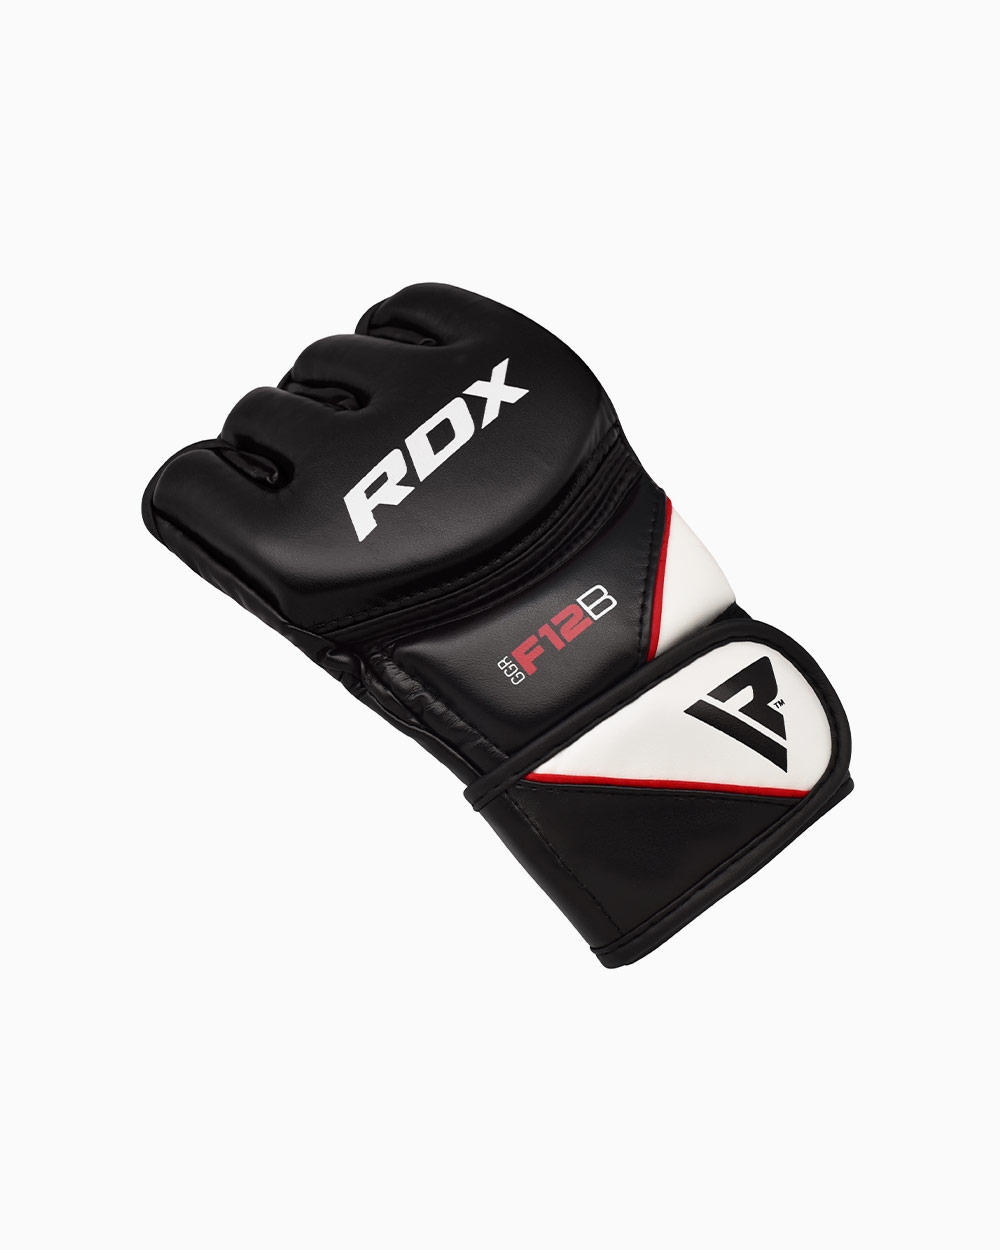 RDX F12 Training MMA Gloves – RDX Sports